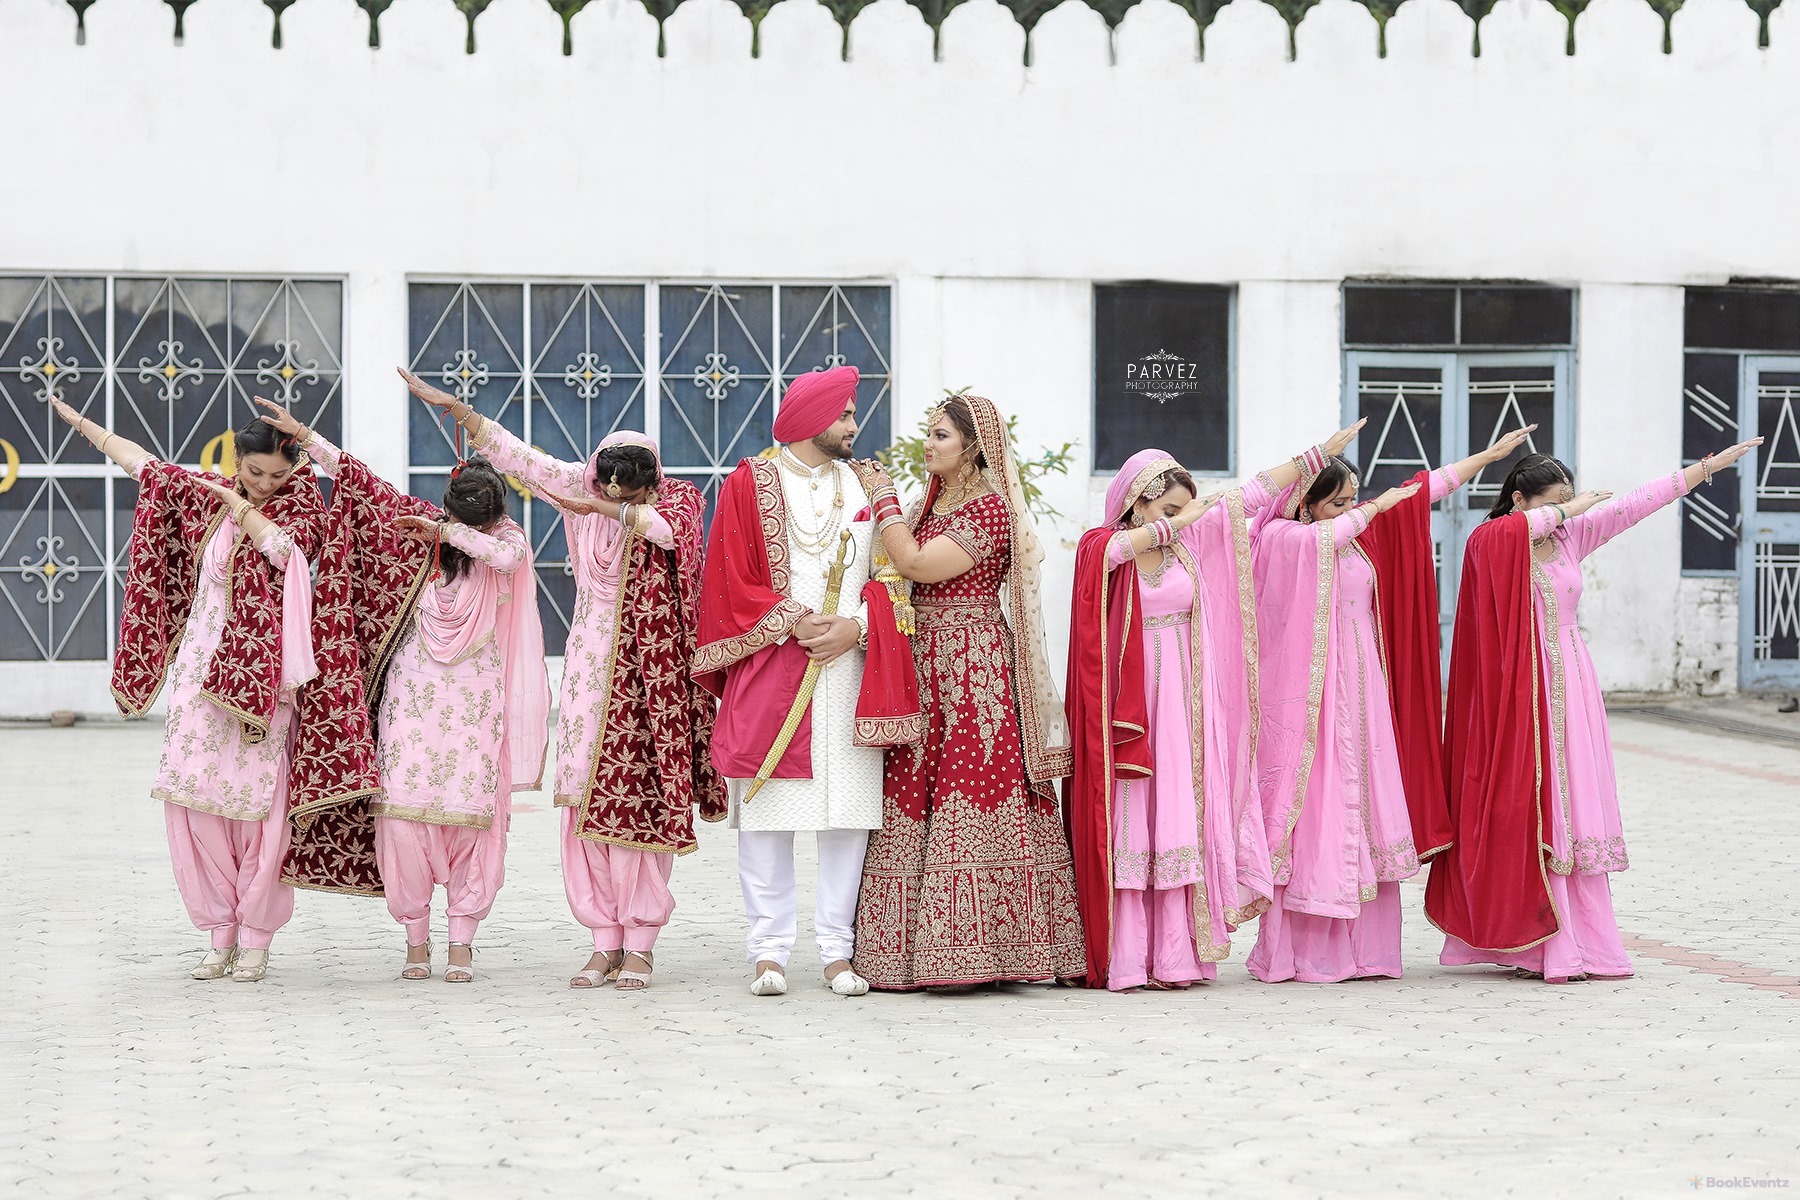 Parvez Fotography Wedding Photographer, Delhi NCR